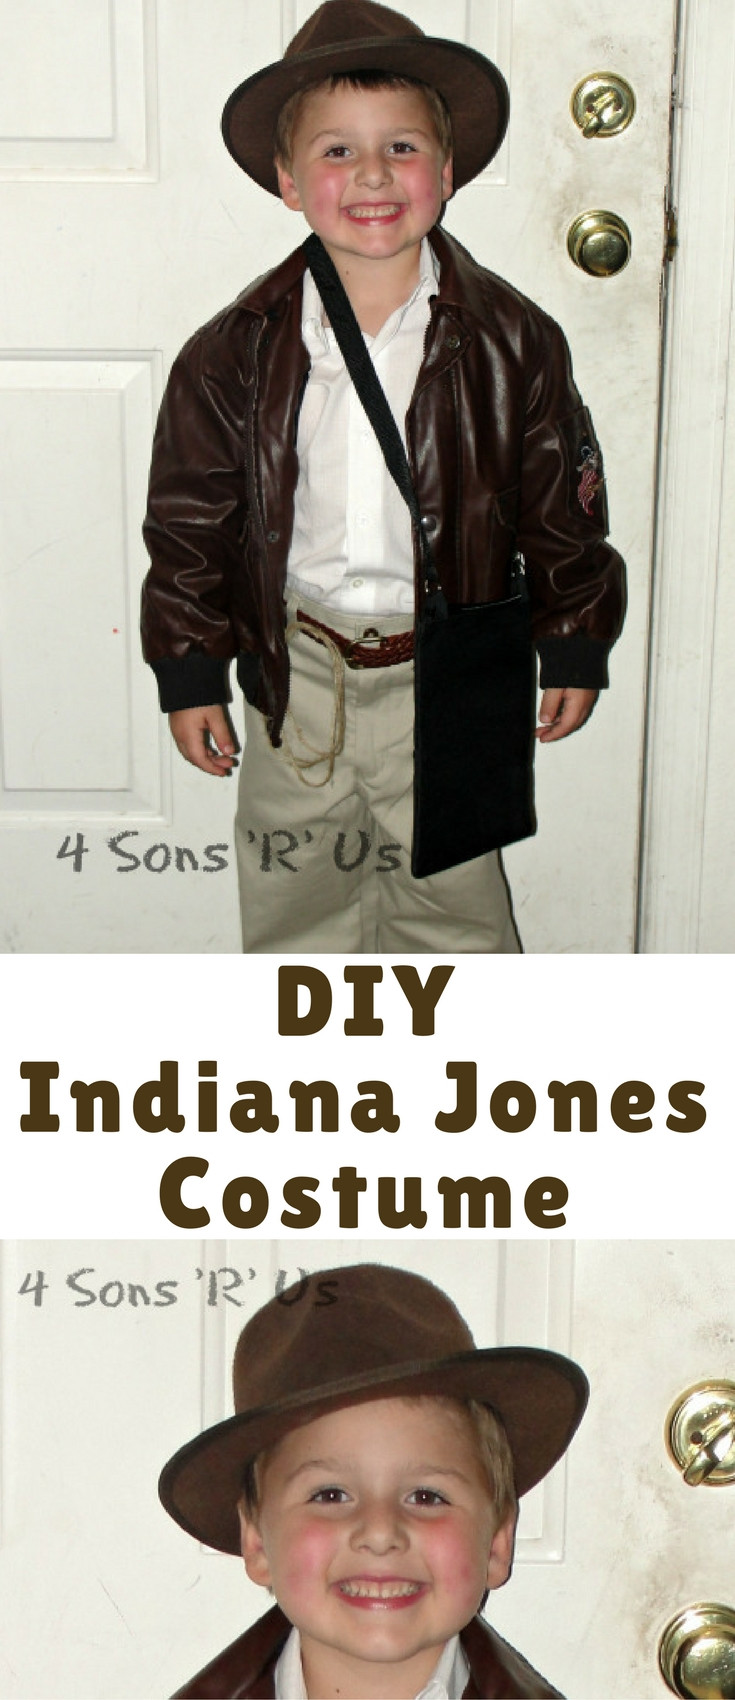 Best ideas about Indiana Jones Costume DIY
. Save or Pin DIY Indiana Jones Costume Blogger Bests Now.